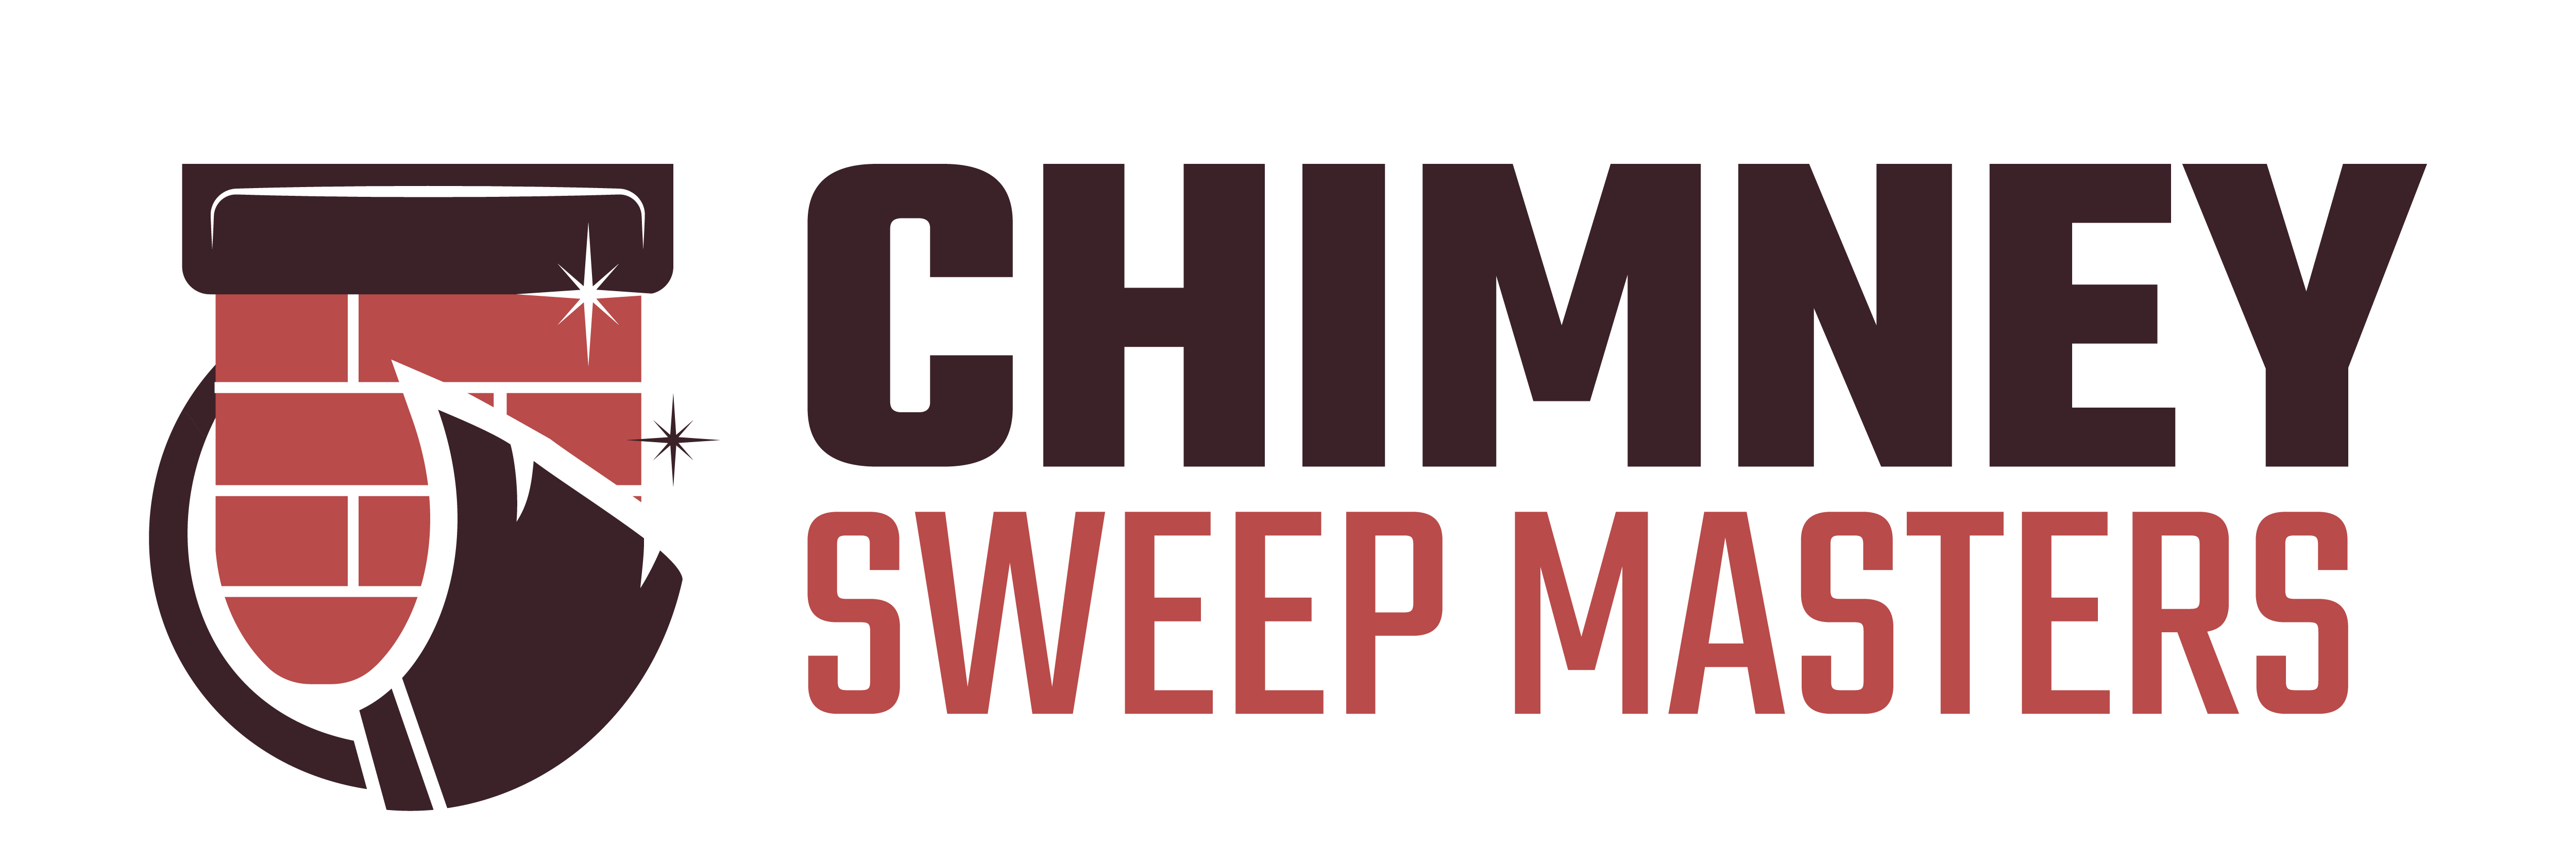 Chimney Sweep Masters Fort Irwin Logo